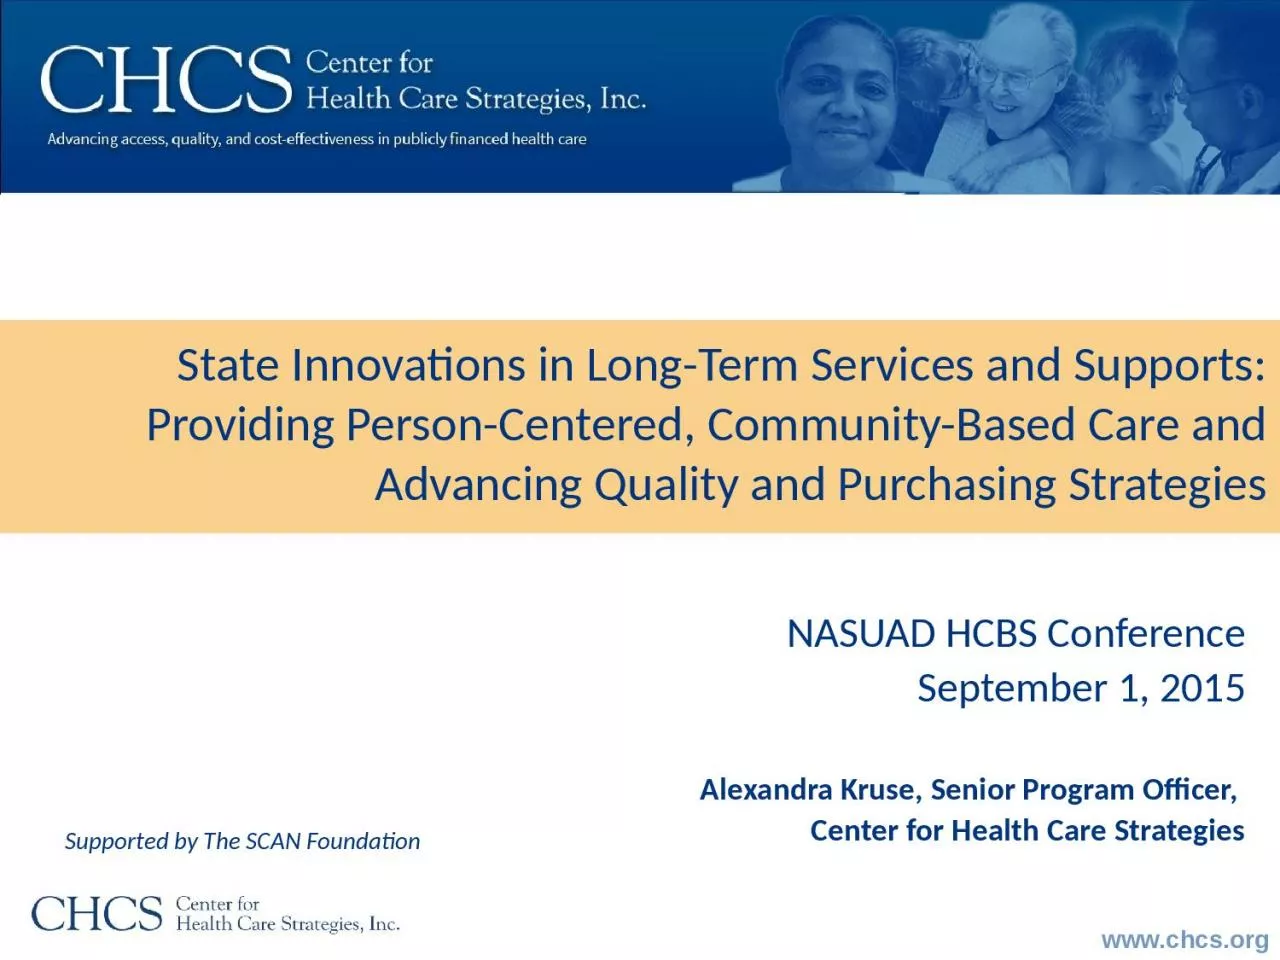 NASUAD HCBS Conference September 1, 2015